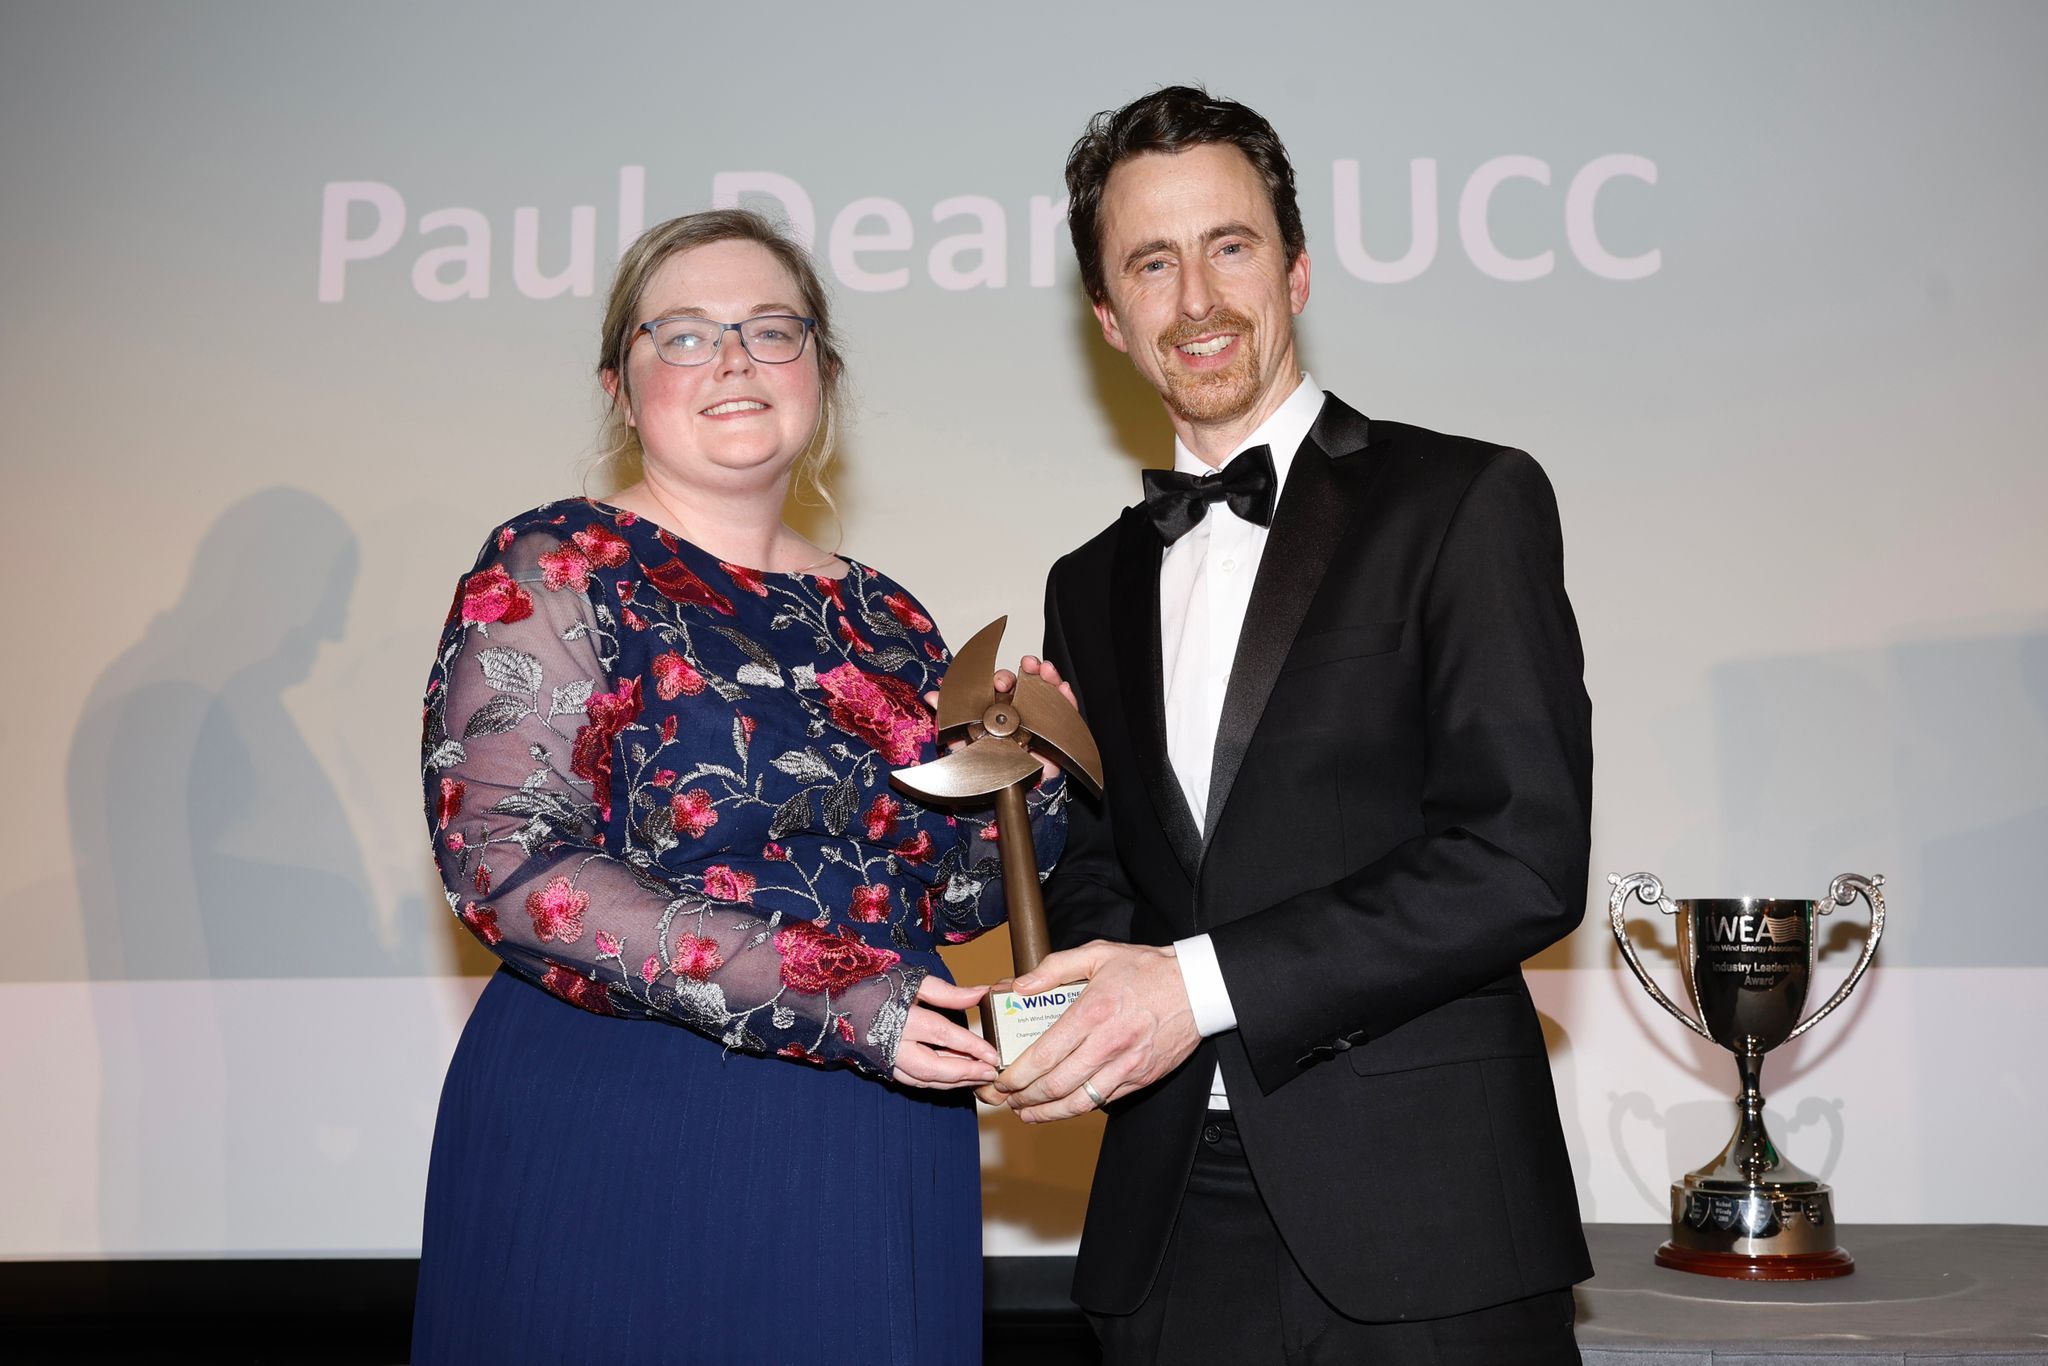 Paul Deane - Irish Wind Award